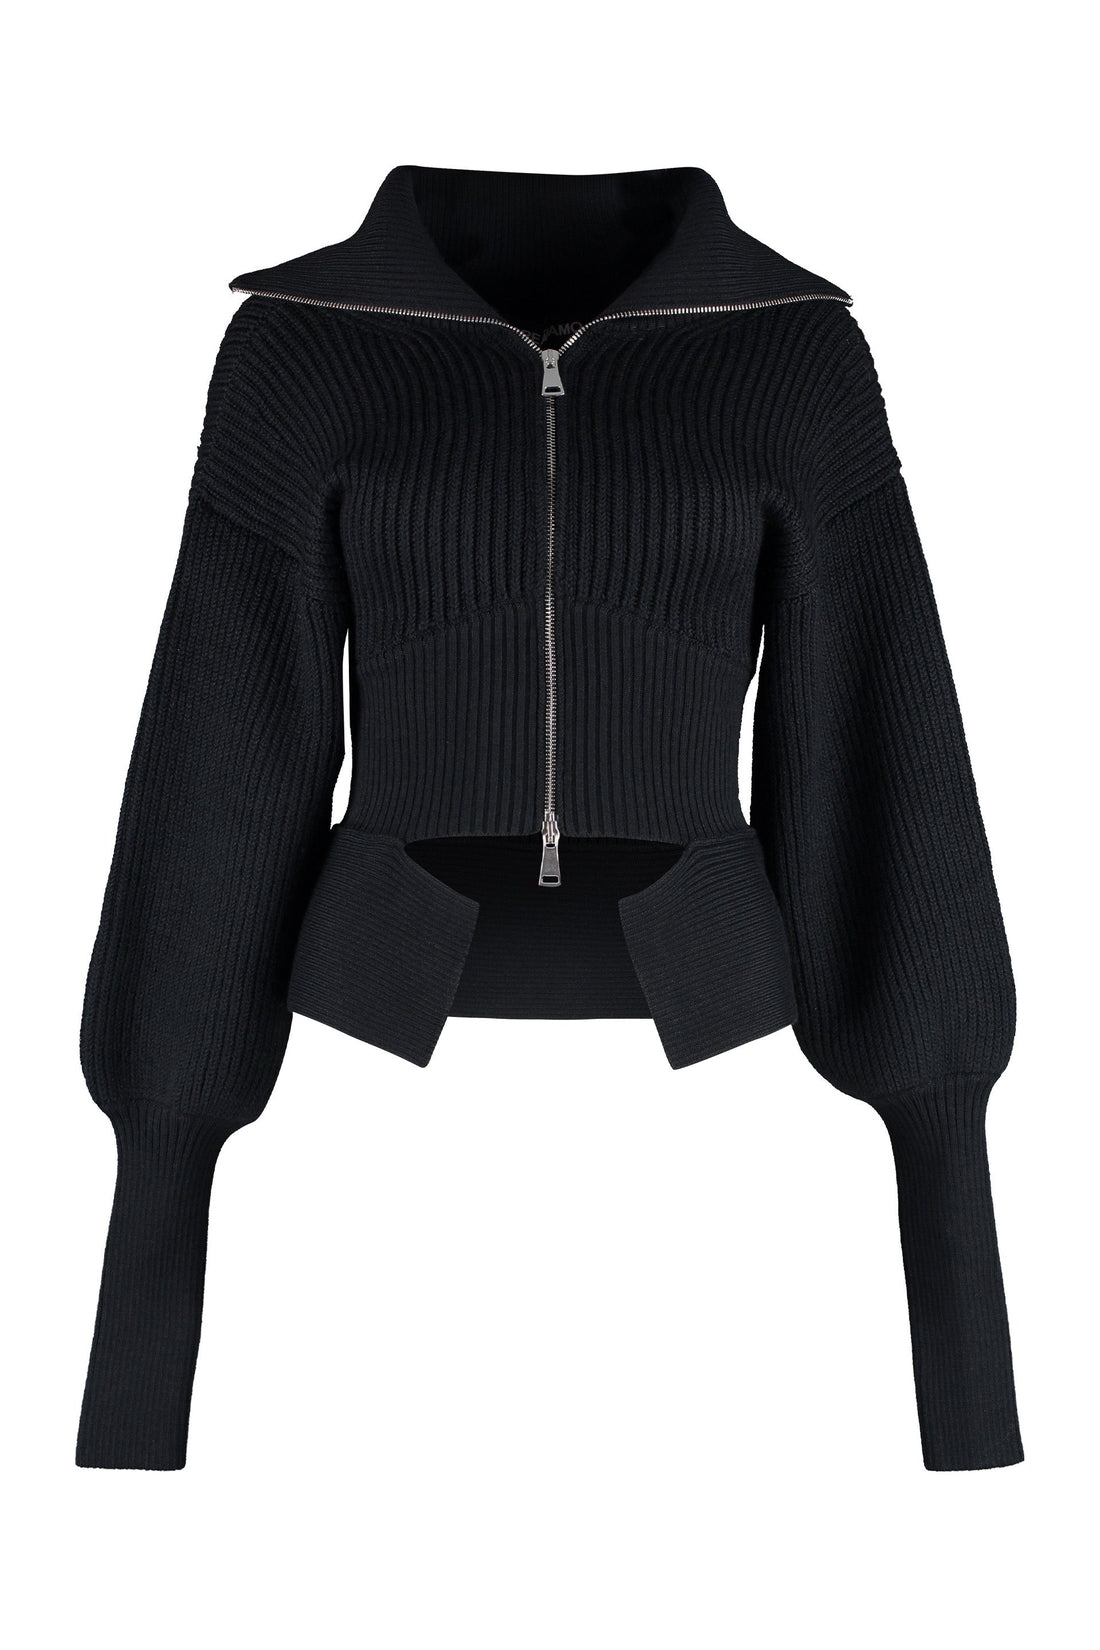 ANDREADAMO-OUTLET-SALE-Turtleneck merino wool sweater-ARCHIVIST